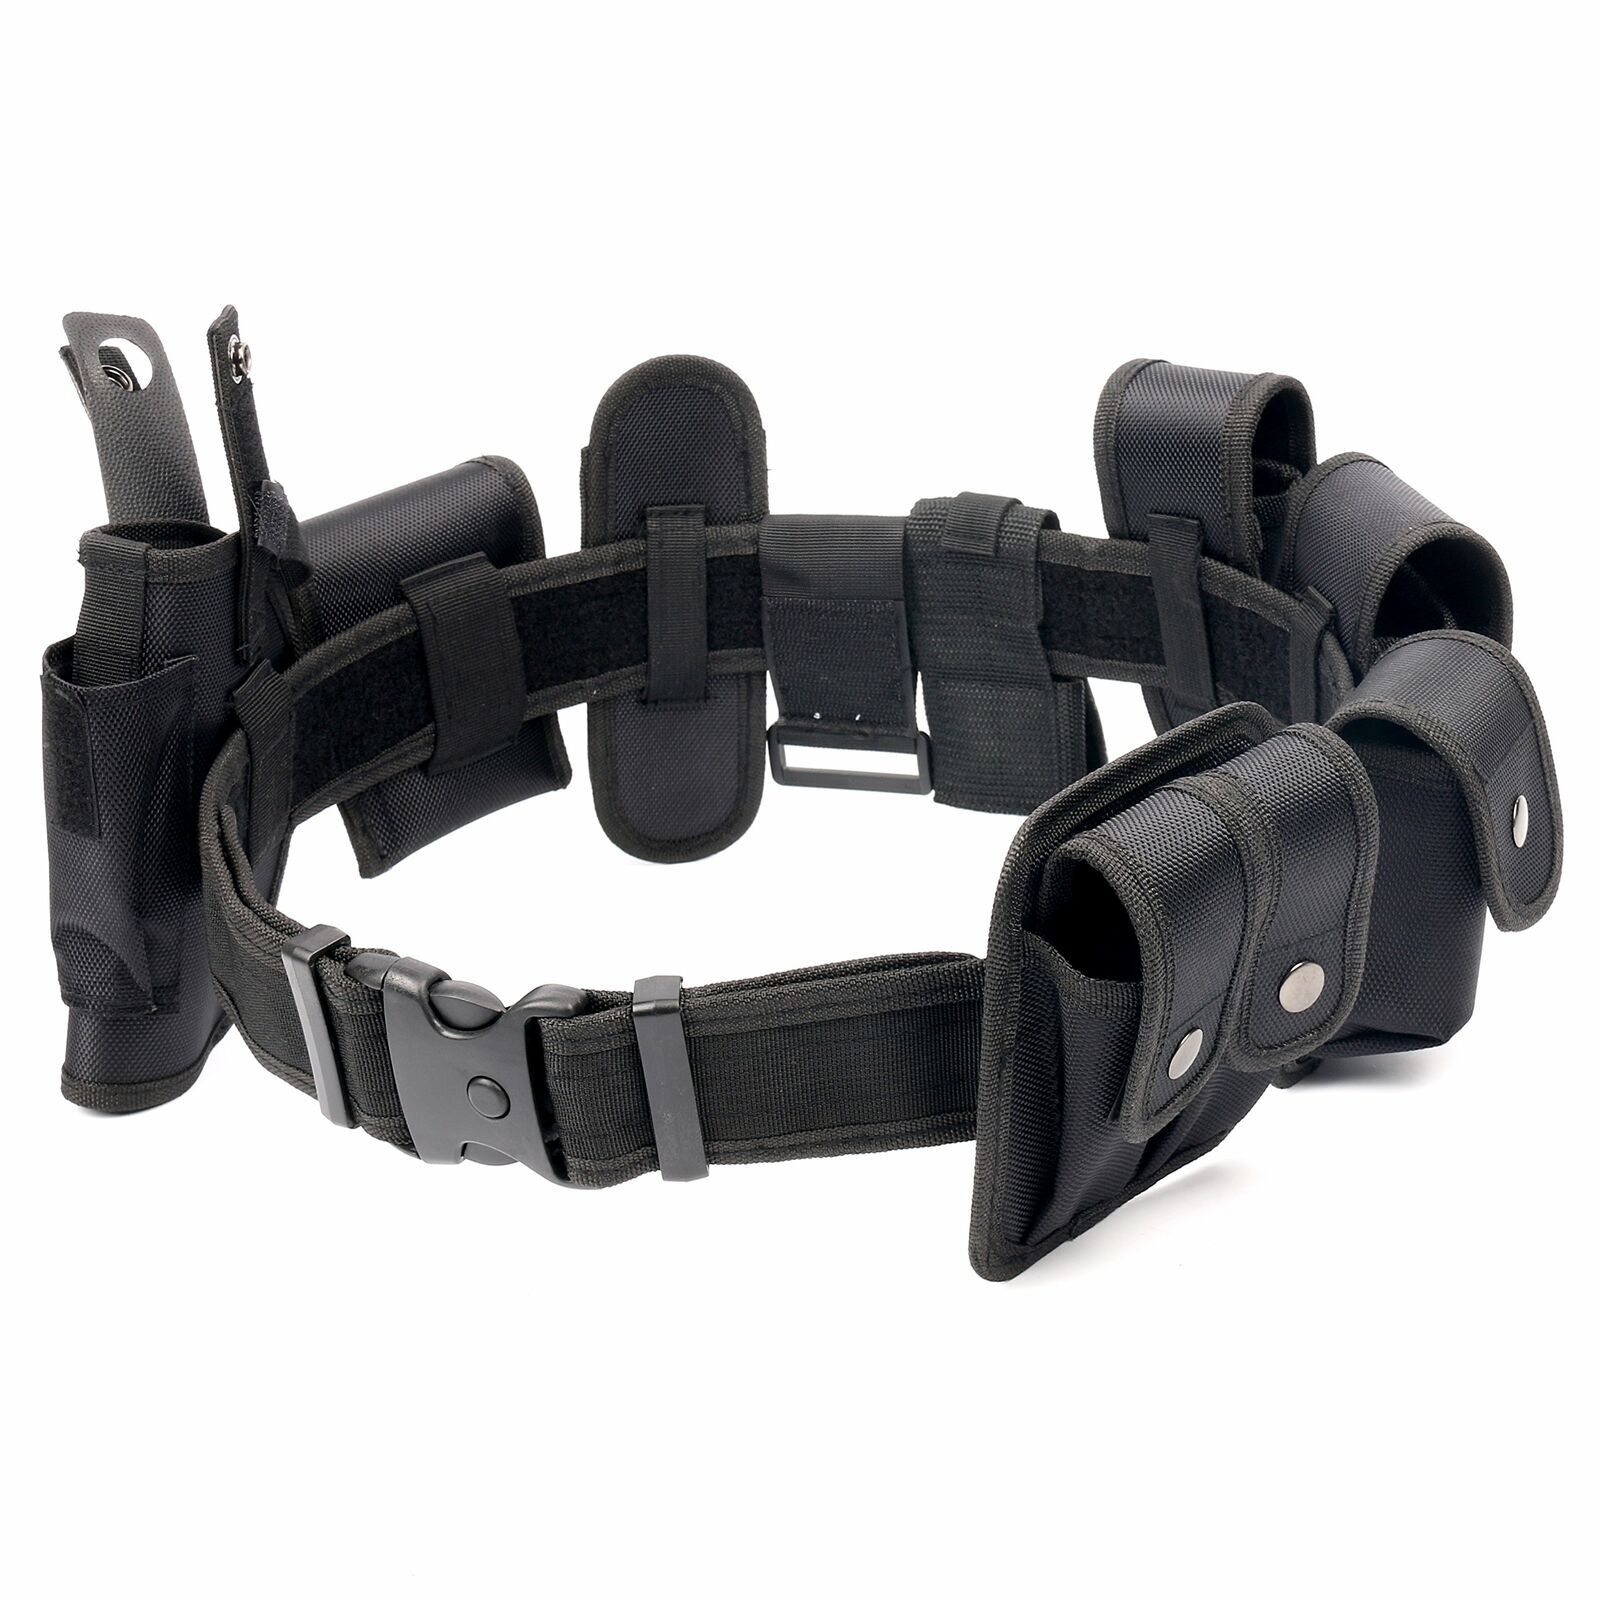 Black Tactical Duty Belt with Modular Equipment